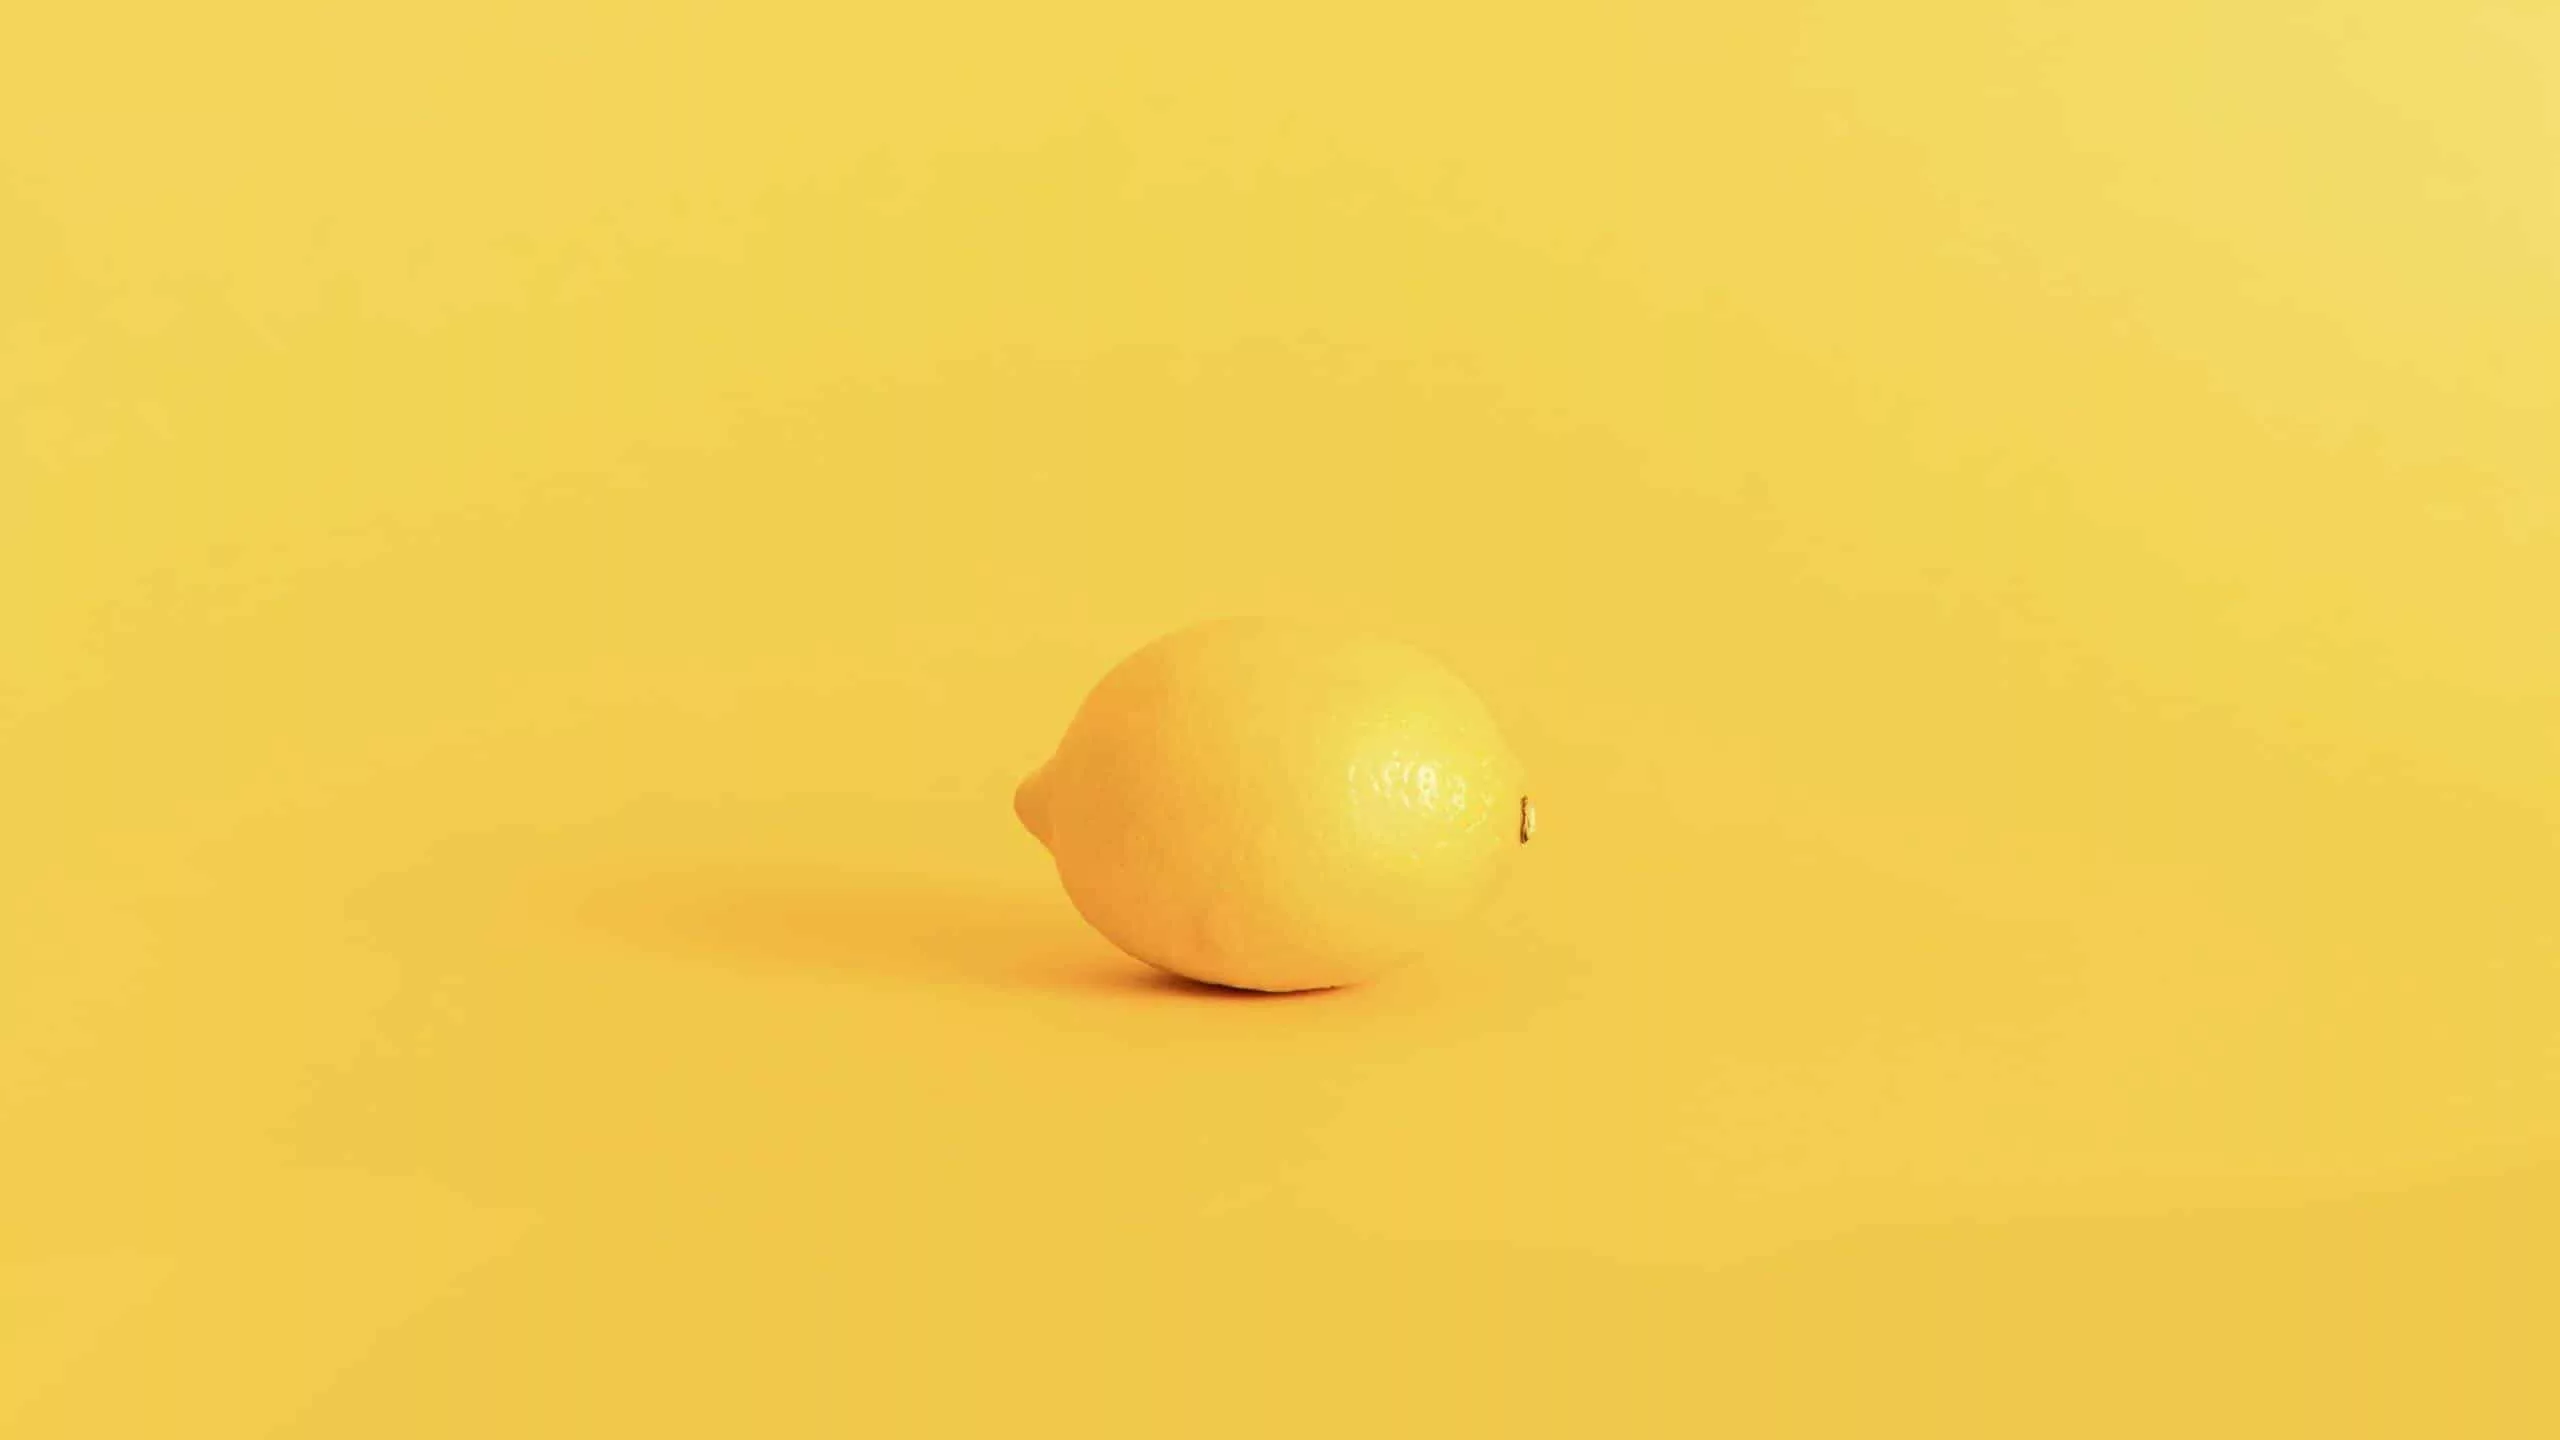 Lemon with yellow background